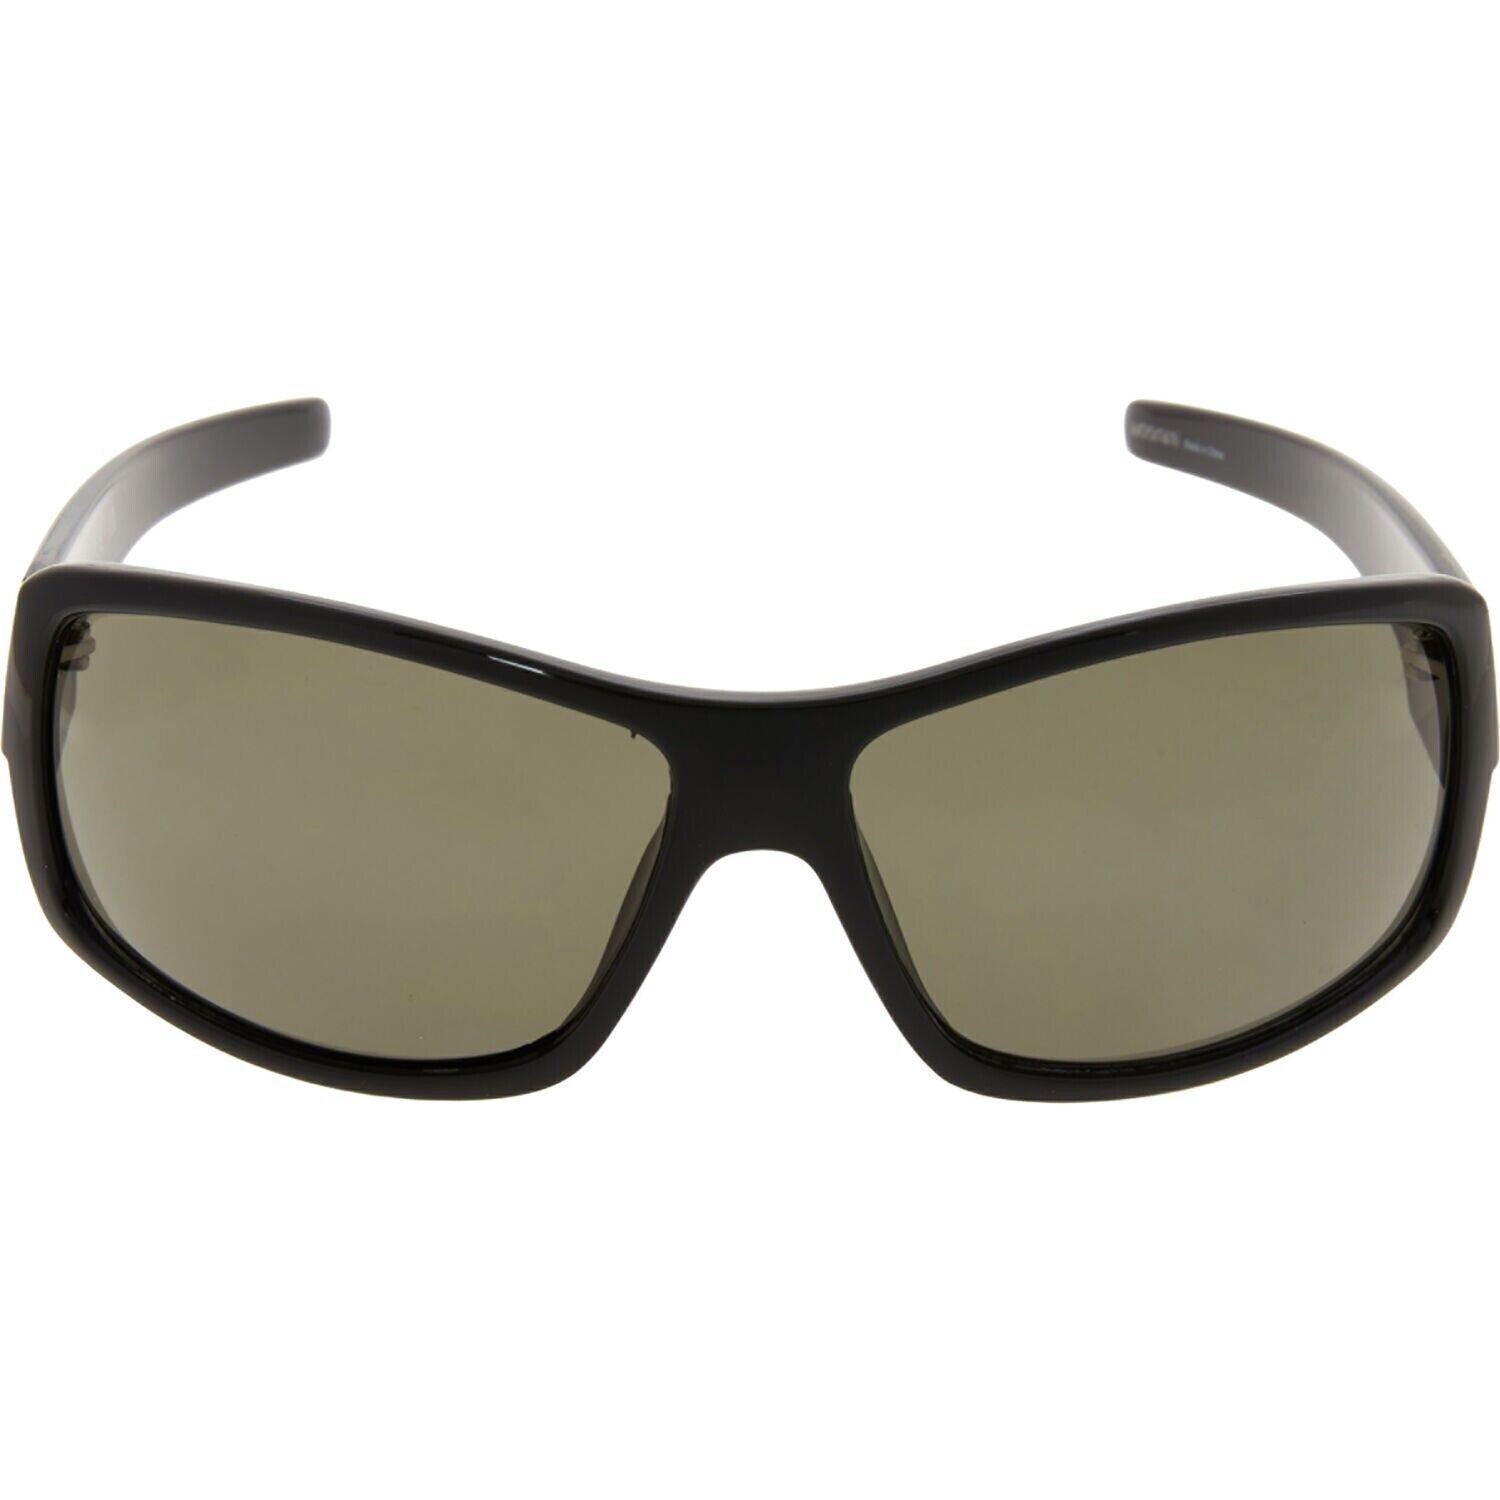 TIMBERLAND Men's Black Wrap Sunglasses, TB7092